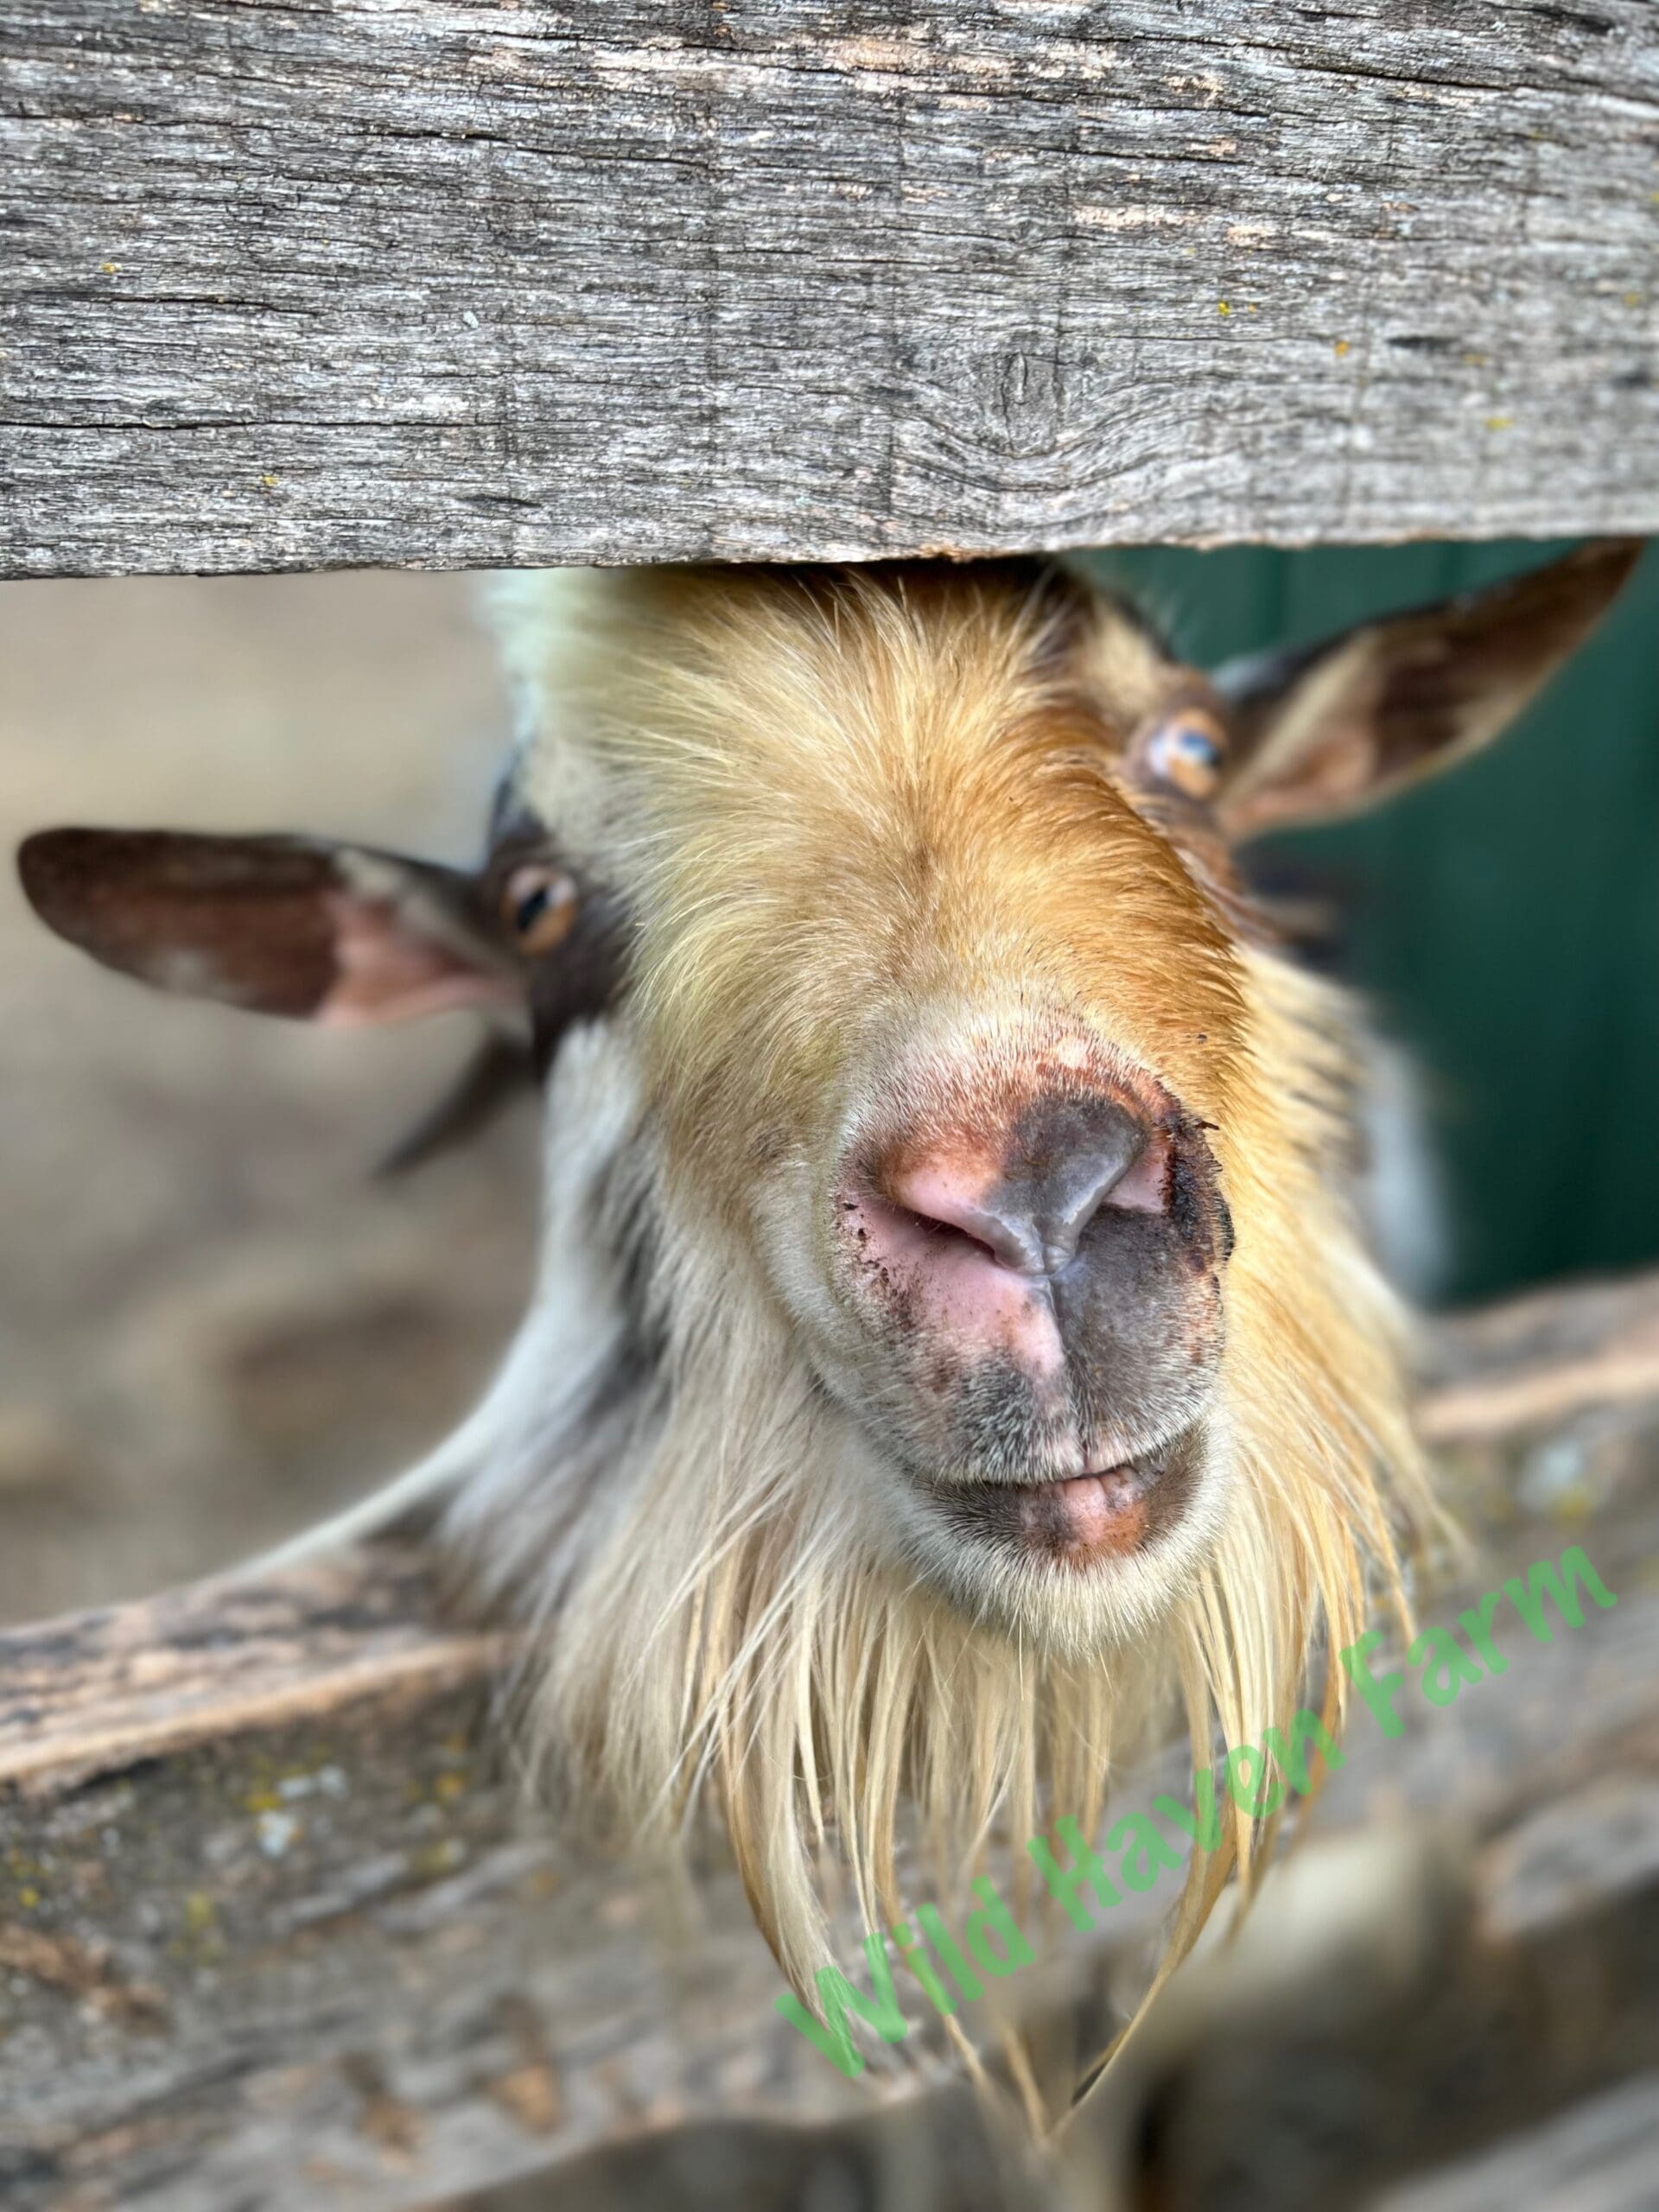 Goat looking between wooden fence rails.